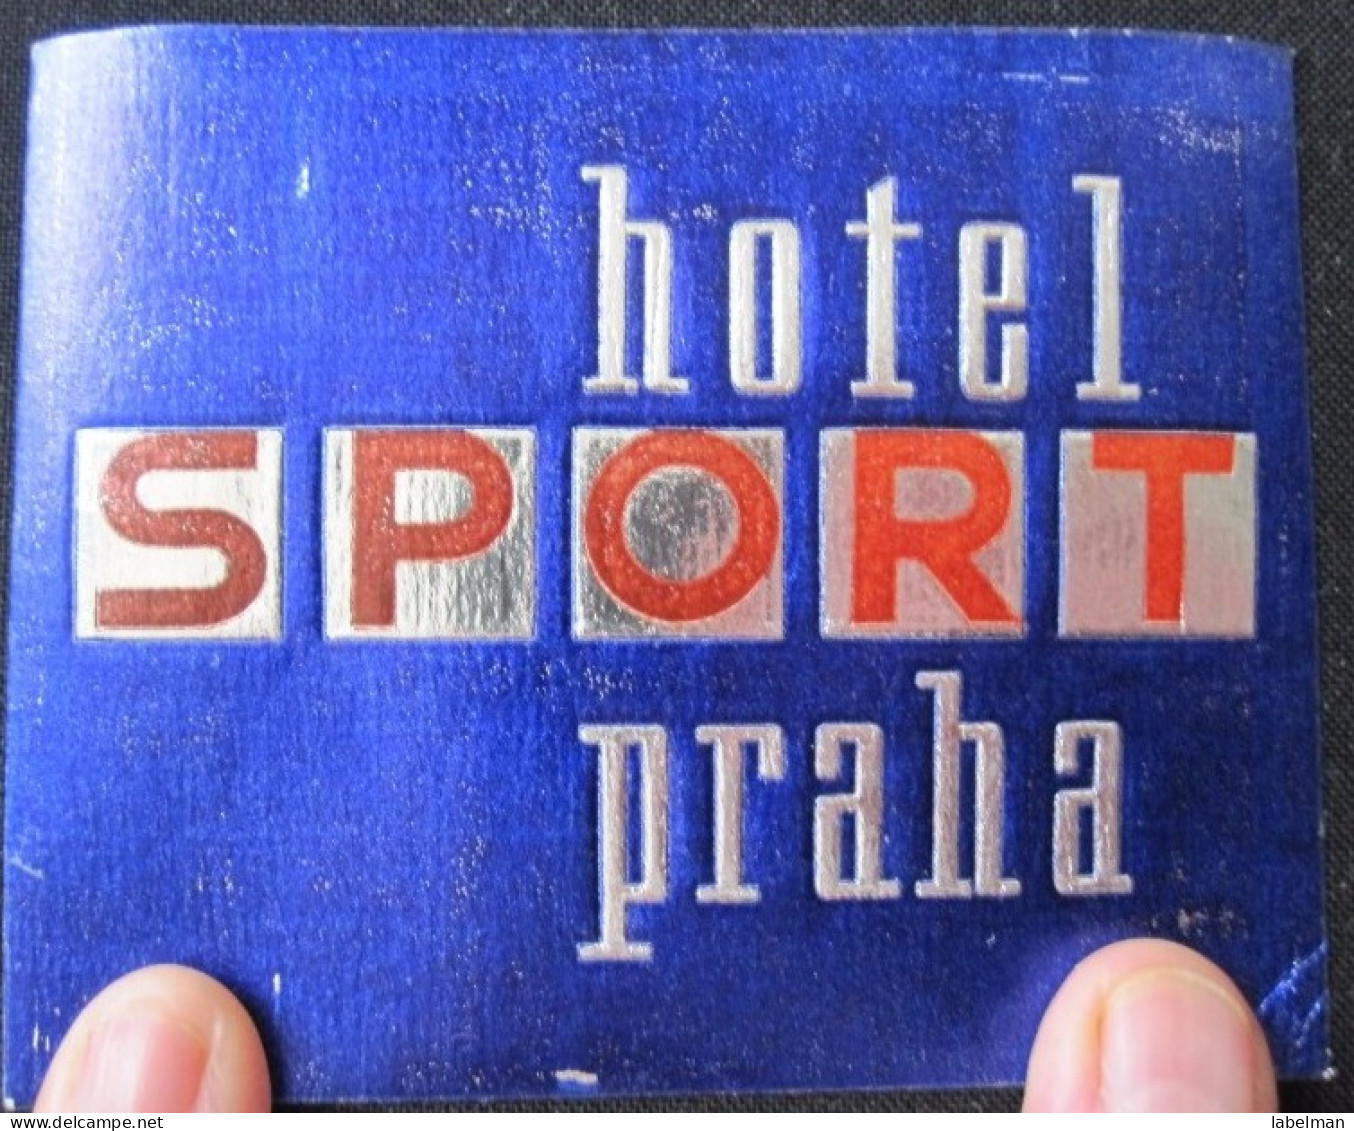 HOTEL MOTEL PENSION SPORT PRAGA PRAHA PRAGUE CSSR CZECH CHEKOSLOVAKIA LUGGAGE LABEL ETIQUETTE AUFKLEBER DECAL STICKER - Hotel Labels